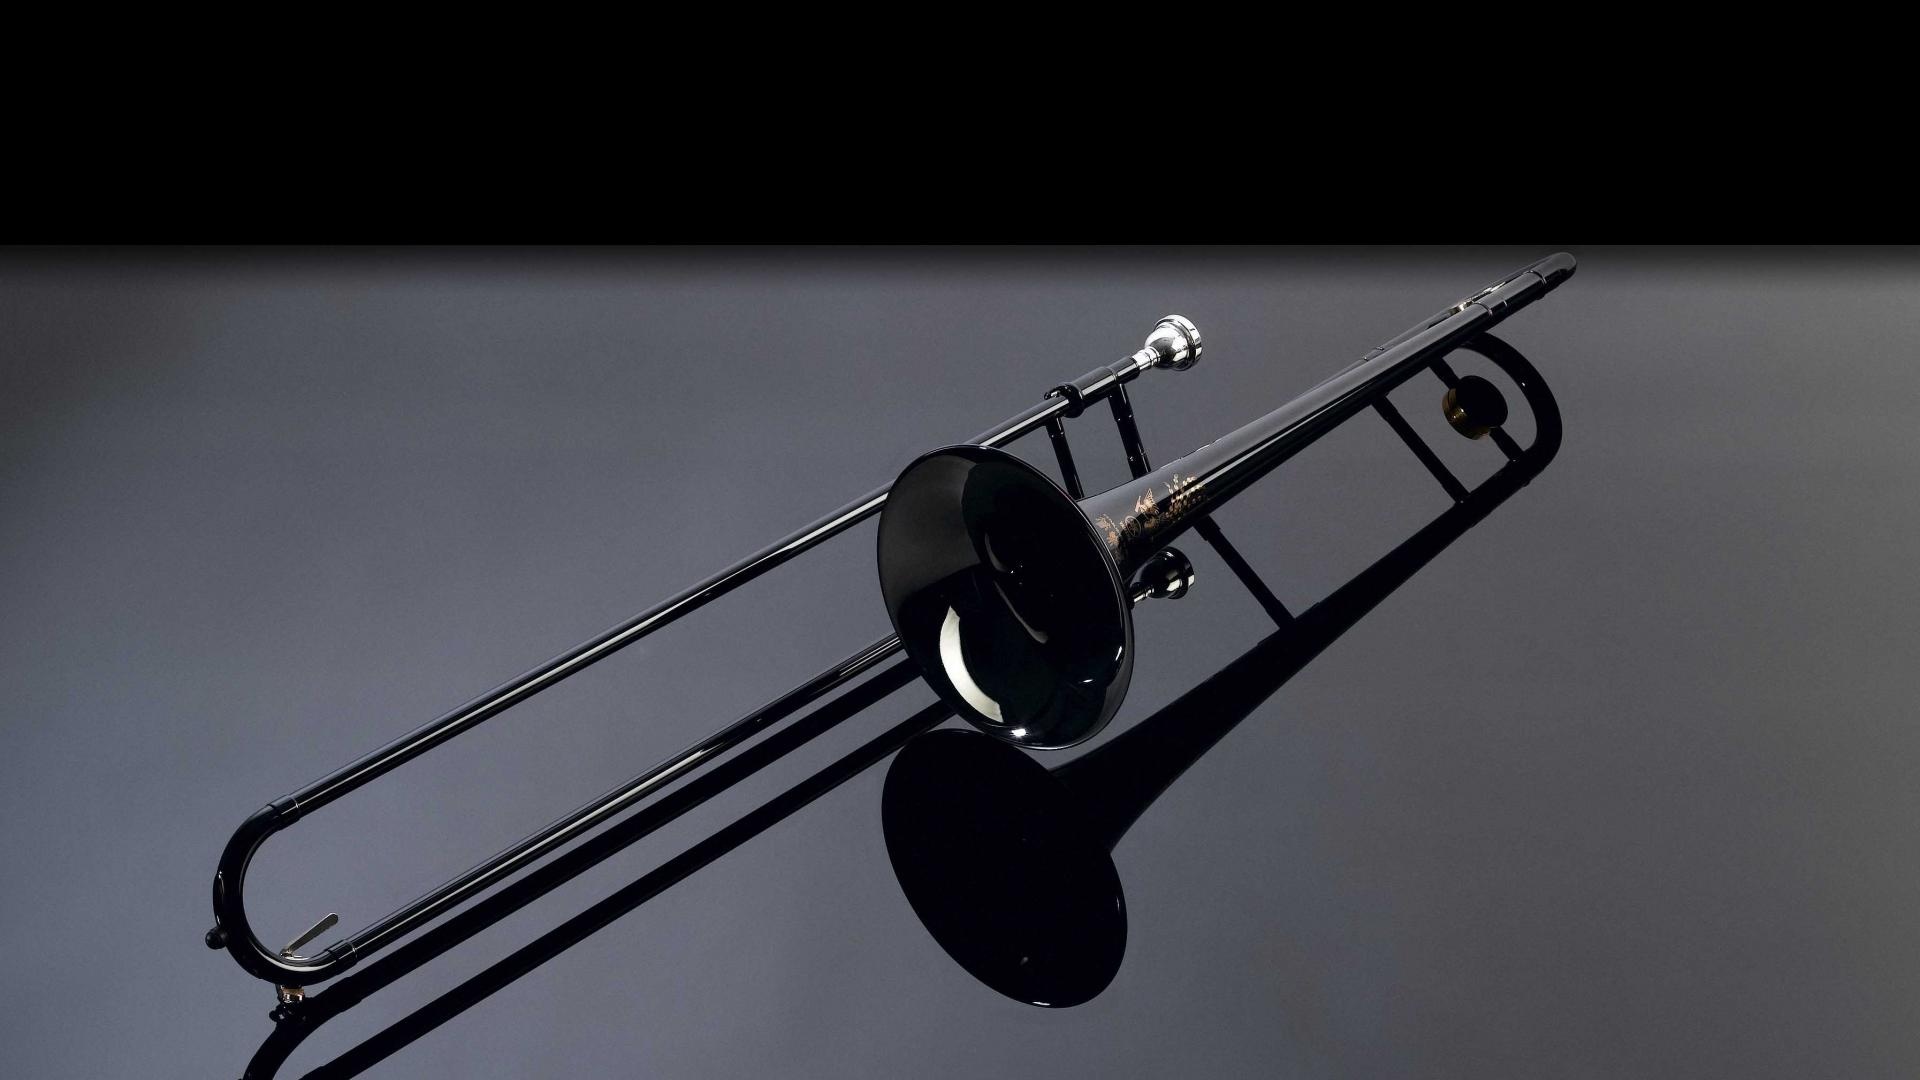 Instruments jazz trombone, HD wallpapers, Melodic beauty, Musical improvisation, 1920x1080 Full HD Desktop